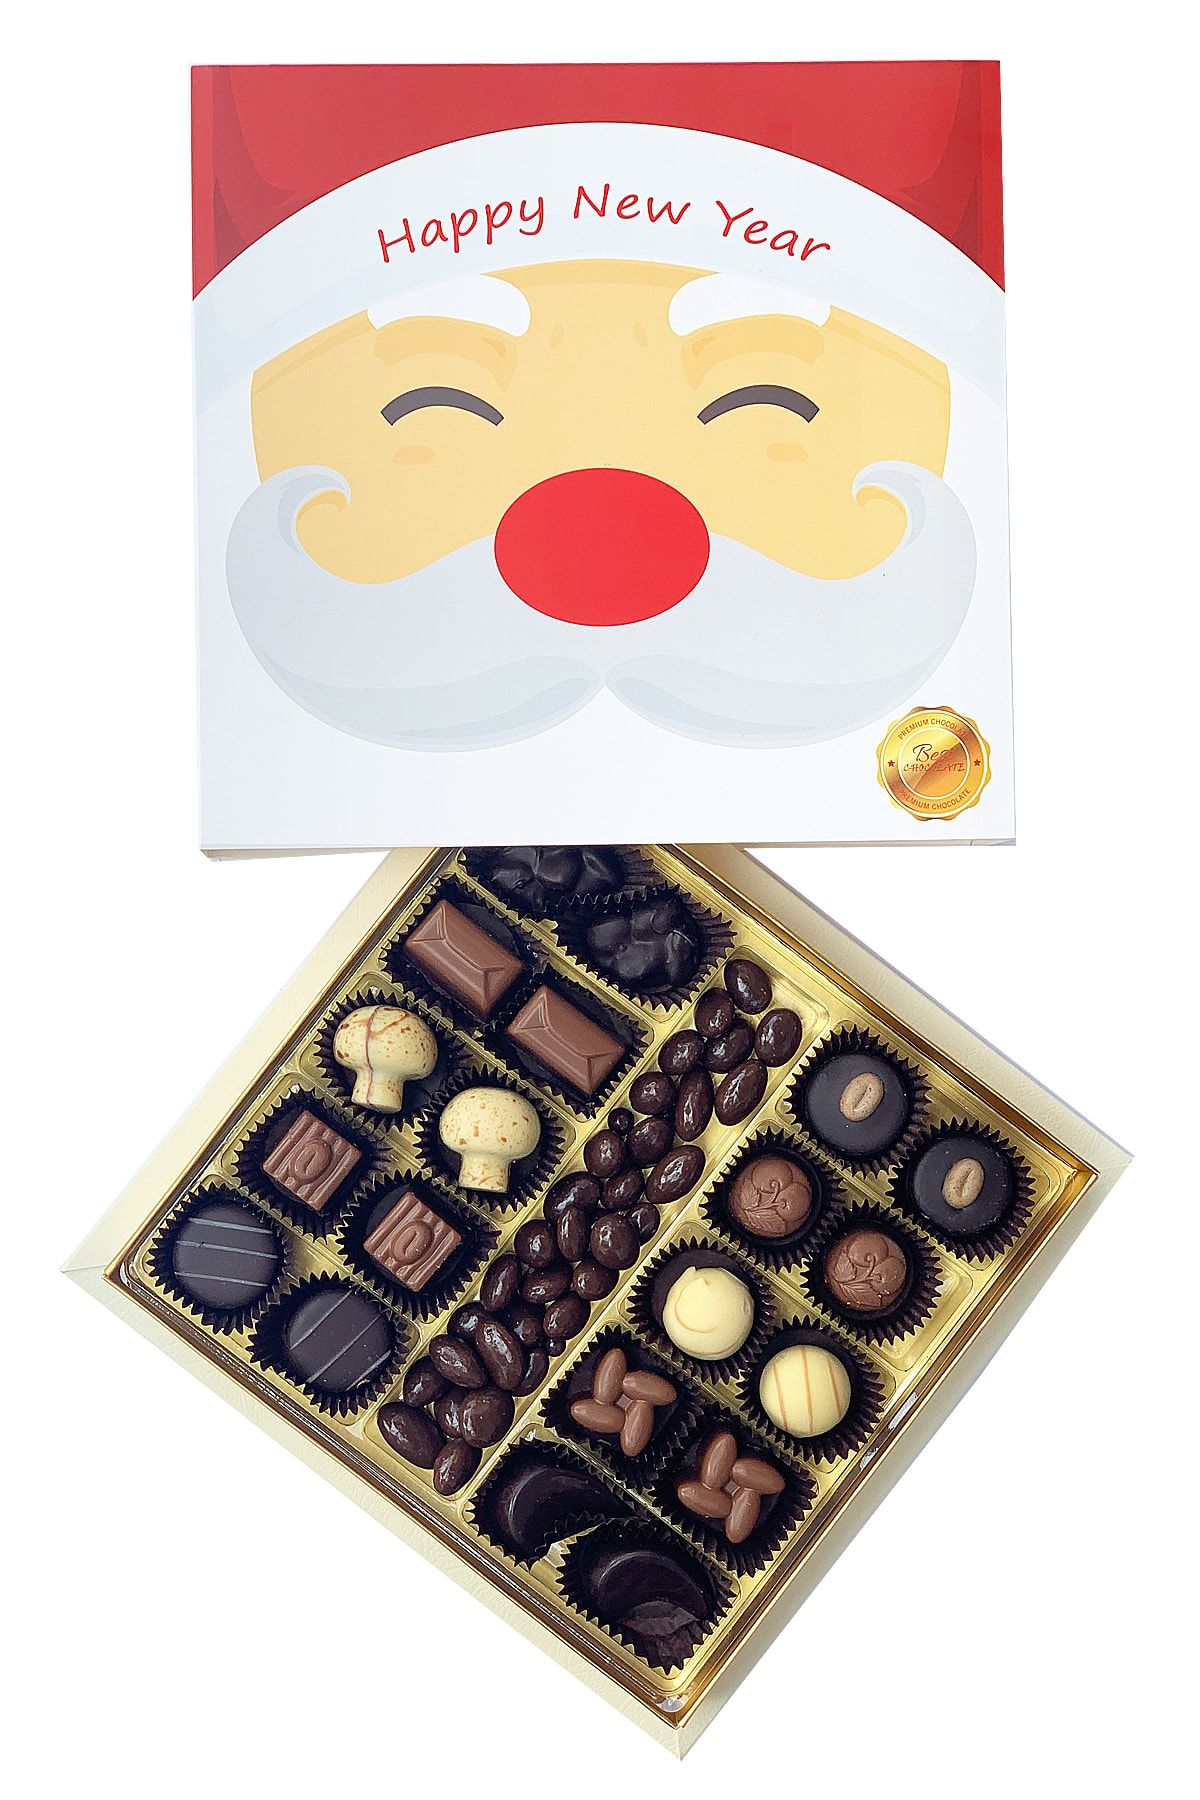 Gondol Çikolata Yılbaşına Özel Kılıflı Spesiyal Çikolata